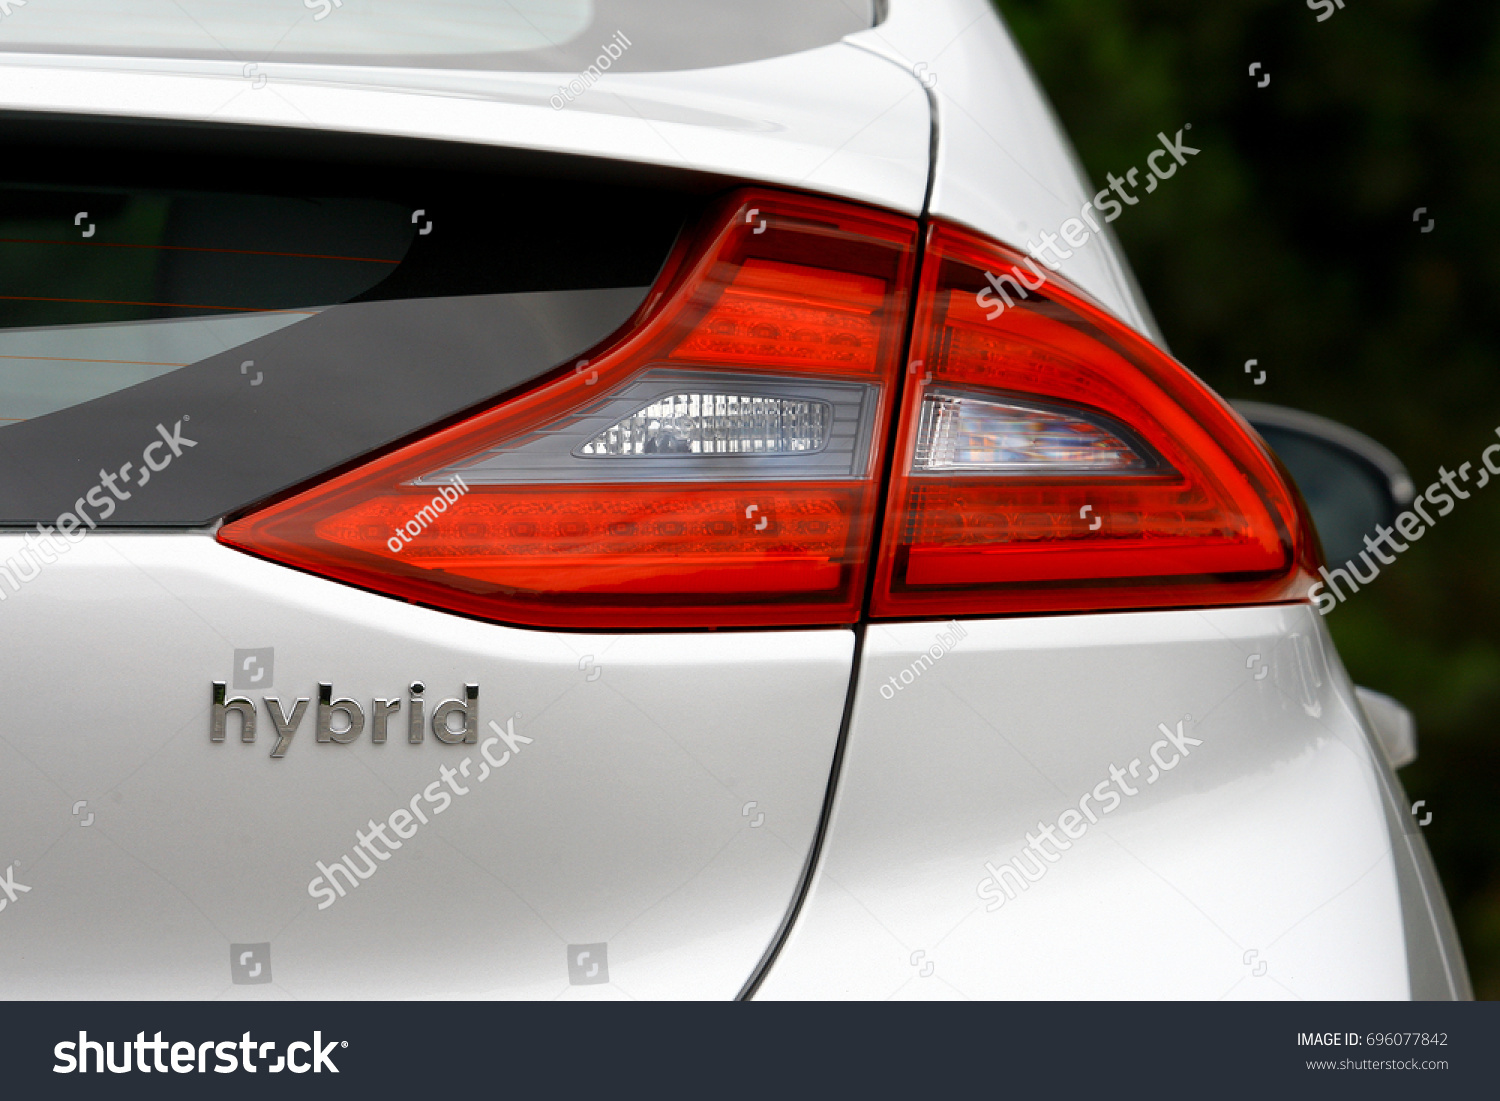 hybrid car led brake tail light #696077842